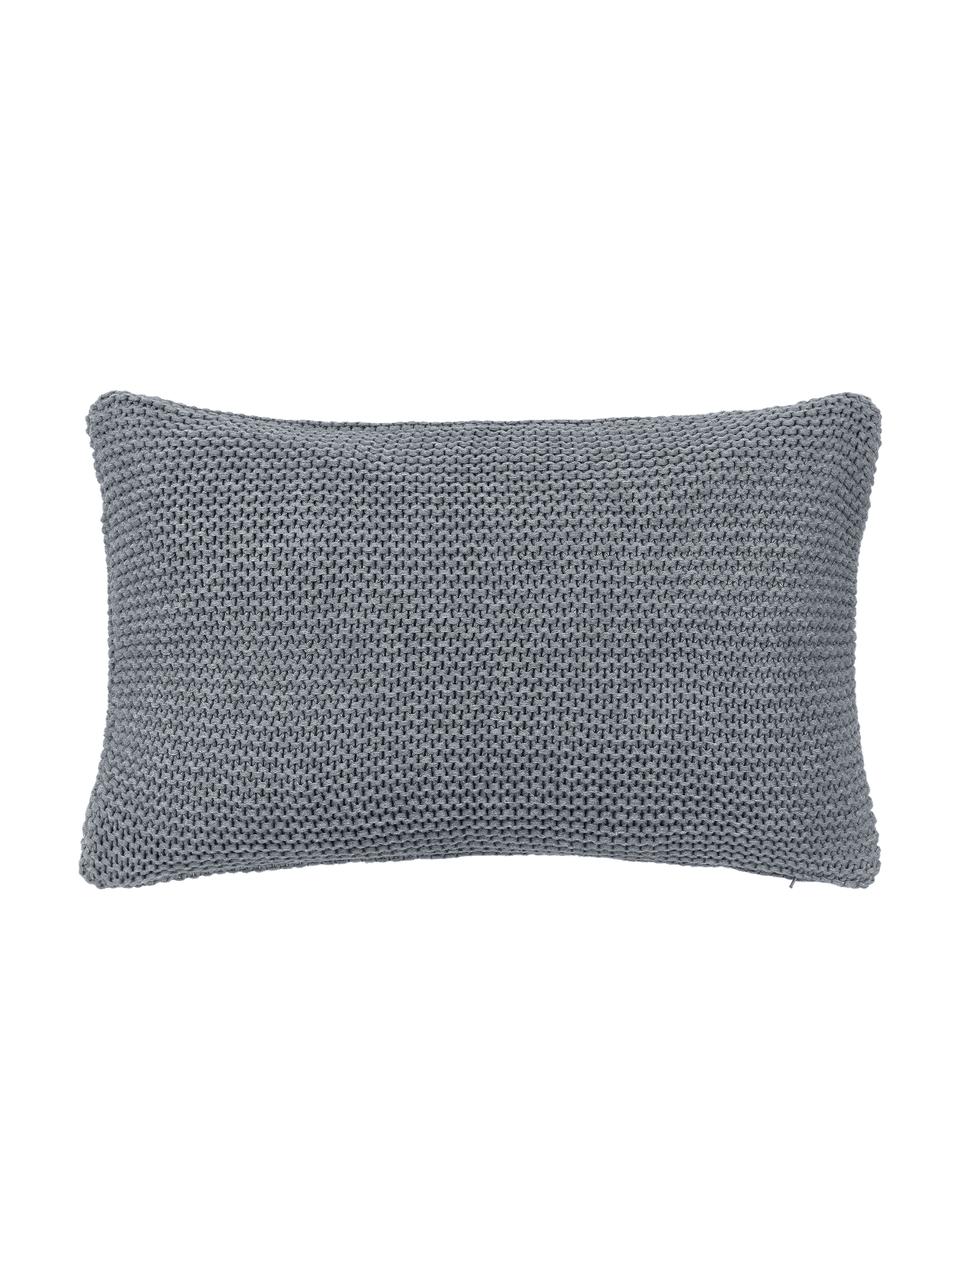 Strick-Kissenhülle Adalyn aus Bio-Baumwolle in Grau, 100% Bio-Baumwolle, GOTS-zertifiziert, Grau, 30 x 50 cm